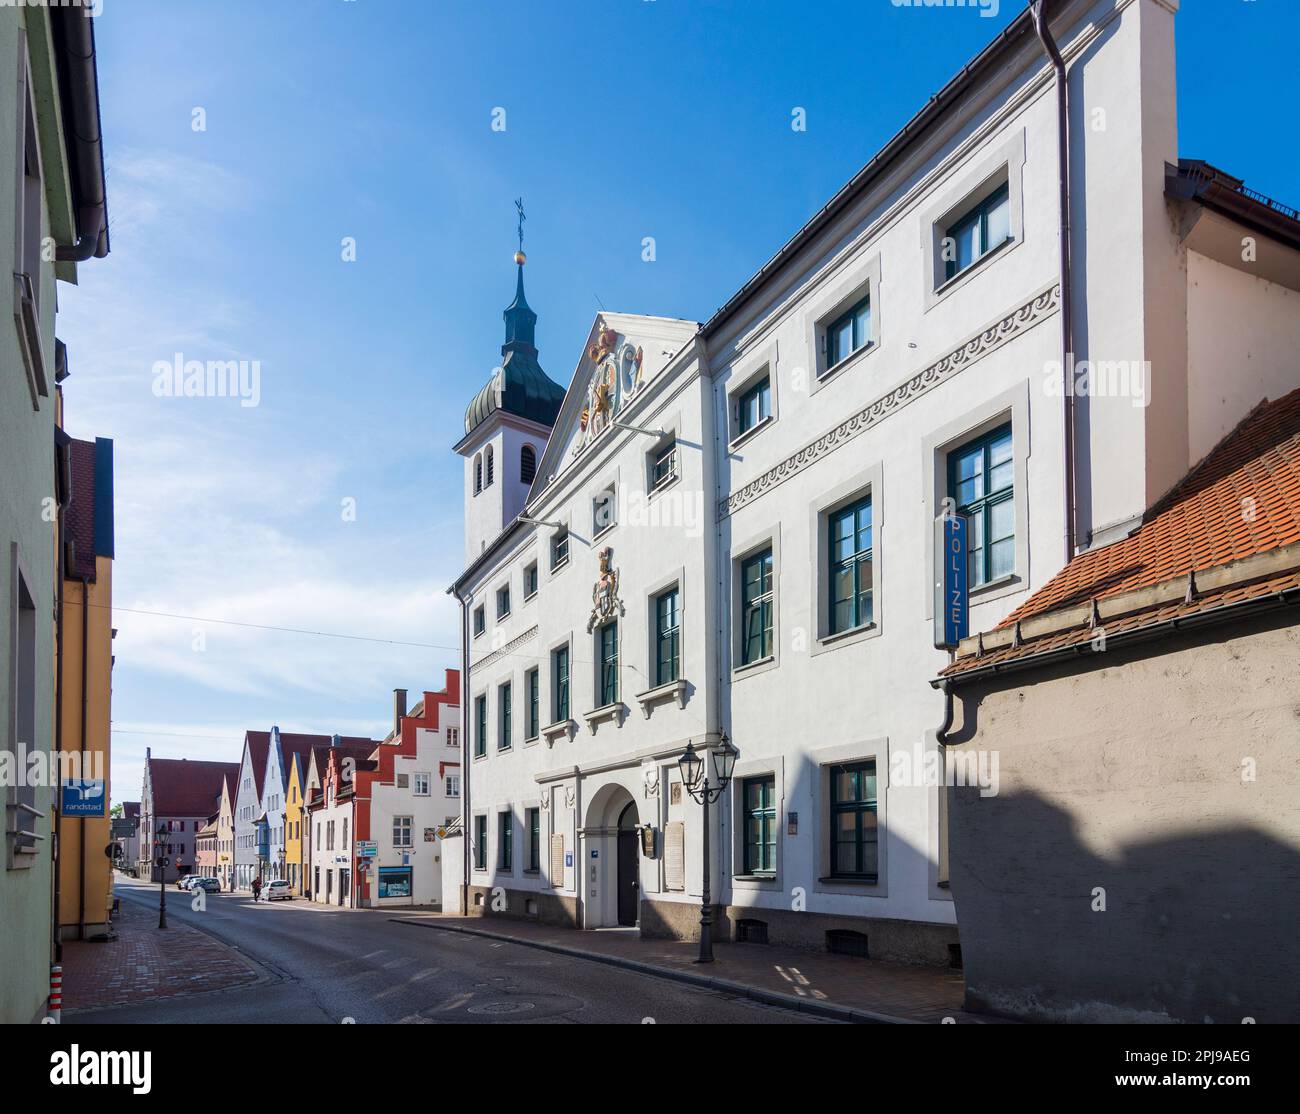 Donauwörth: house Deutschordenshaus of the Teutonic Order, Old Town in Schwaben, Swabia, Bayern, Bavaria, Germany Stock Photo